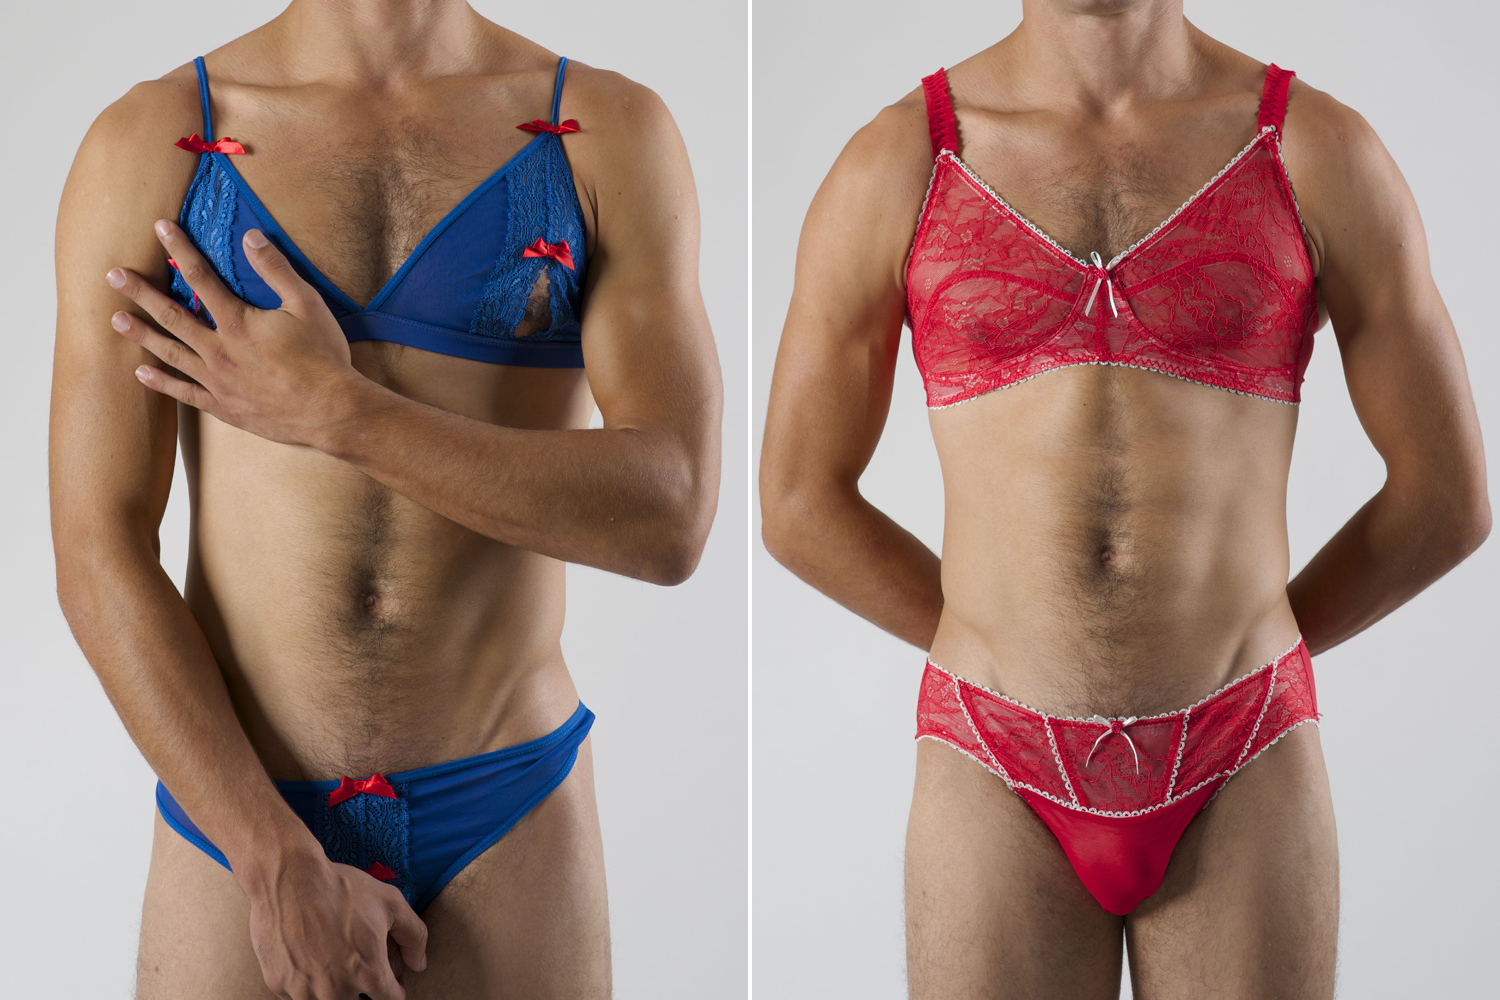 aril peterpen share men in lingerie videos photos